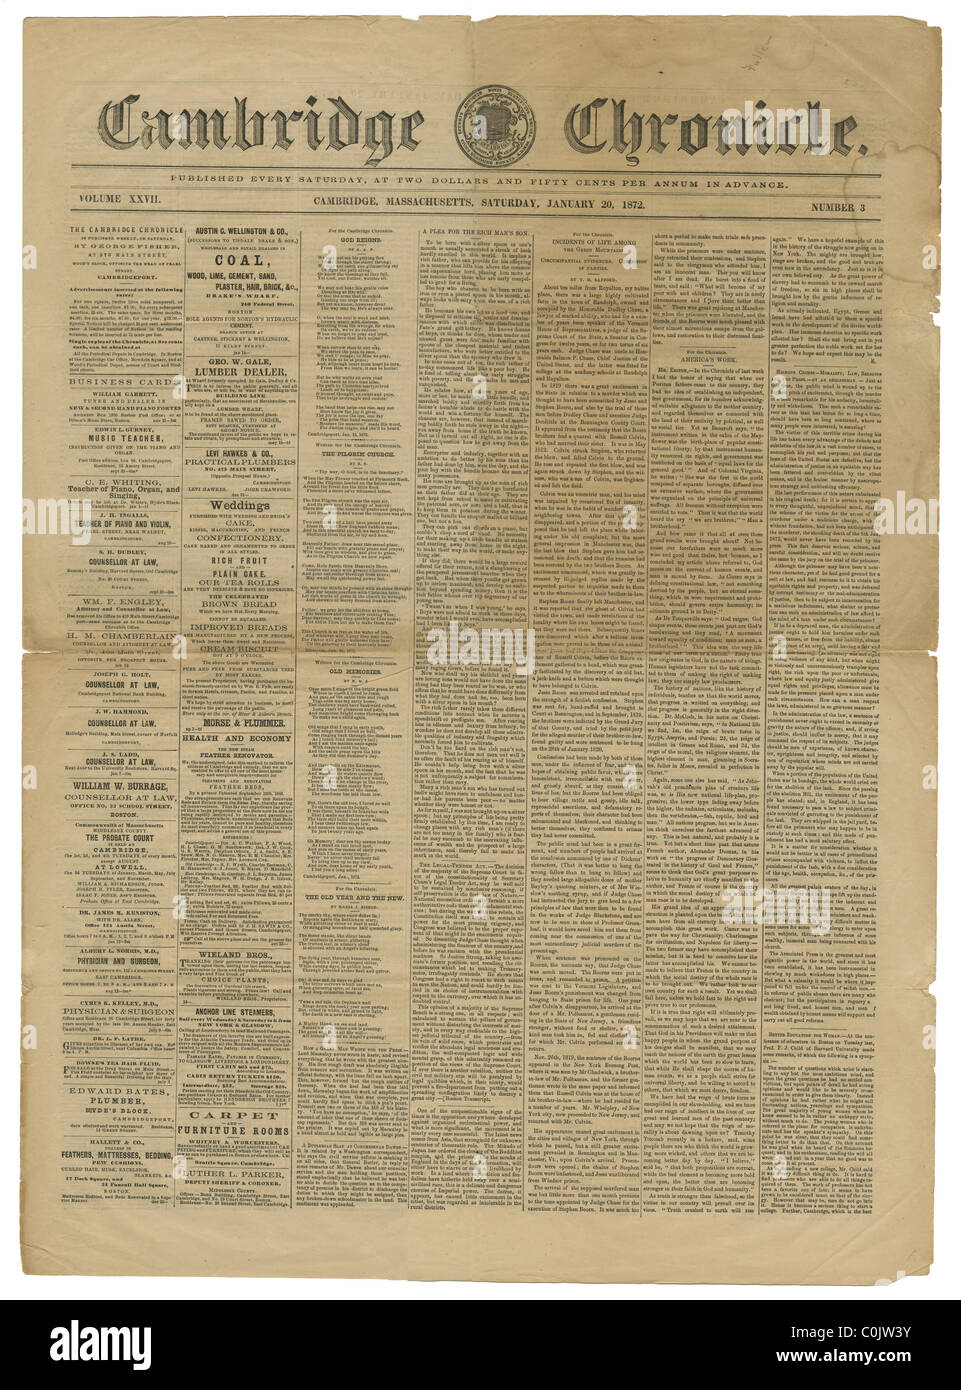 January 20, 1872 Cambridge Chronicle newspaper, Cambridge, Massachusetts. Volume 27, No. 3. Stock Photo